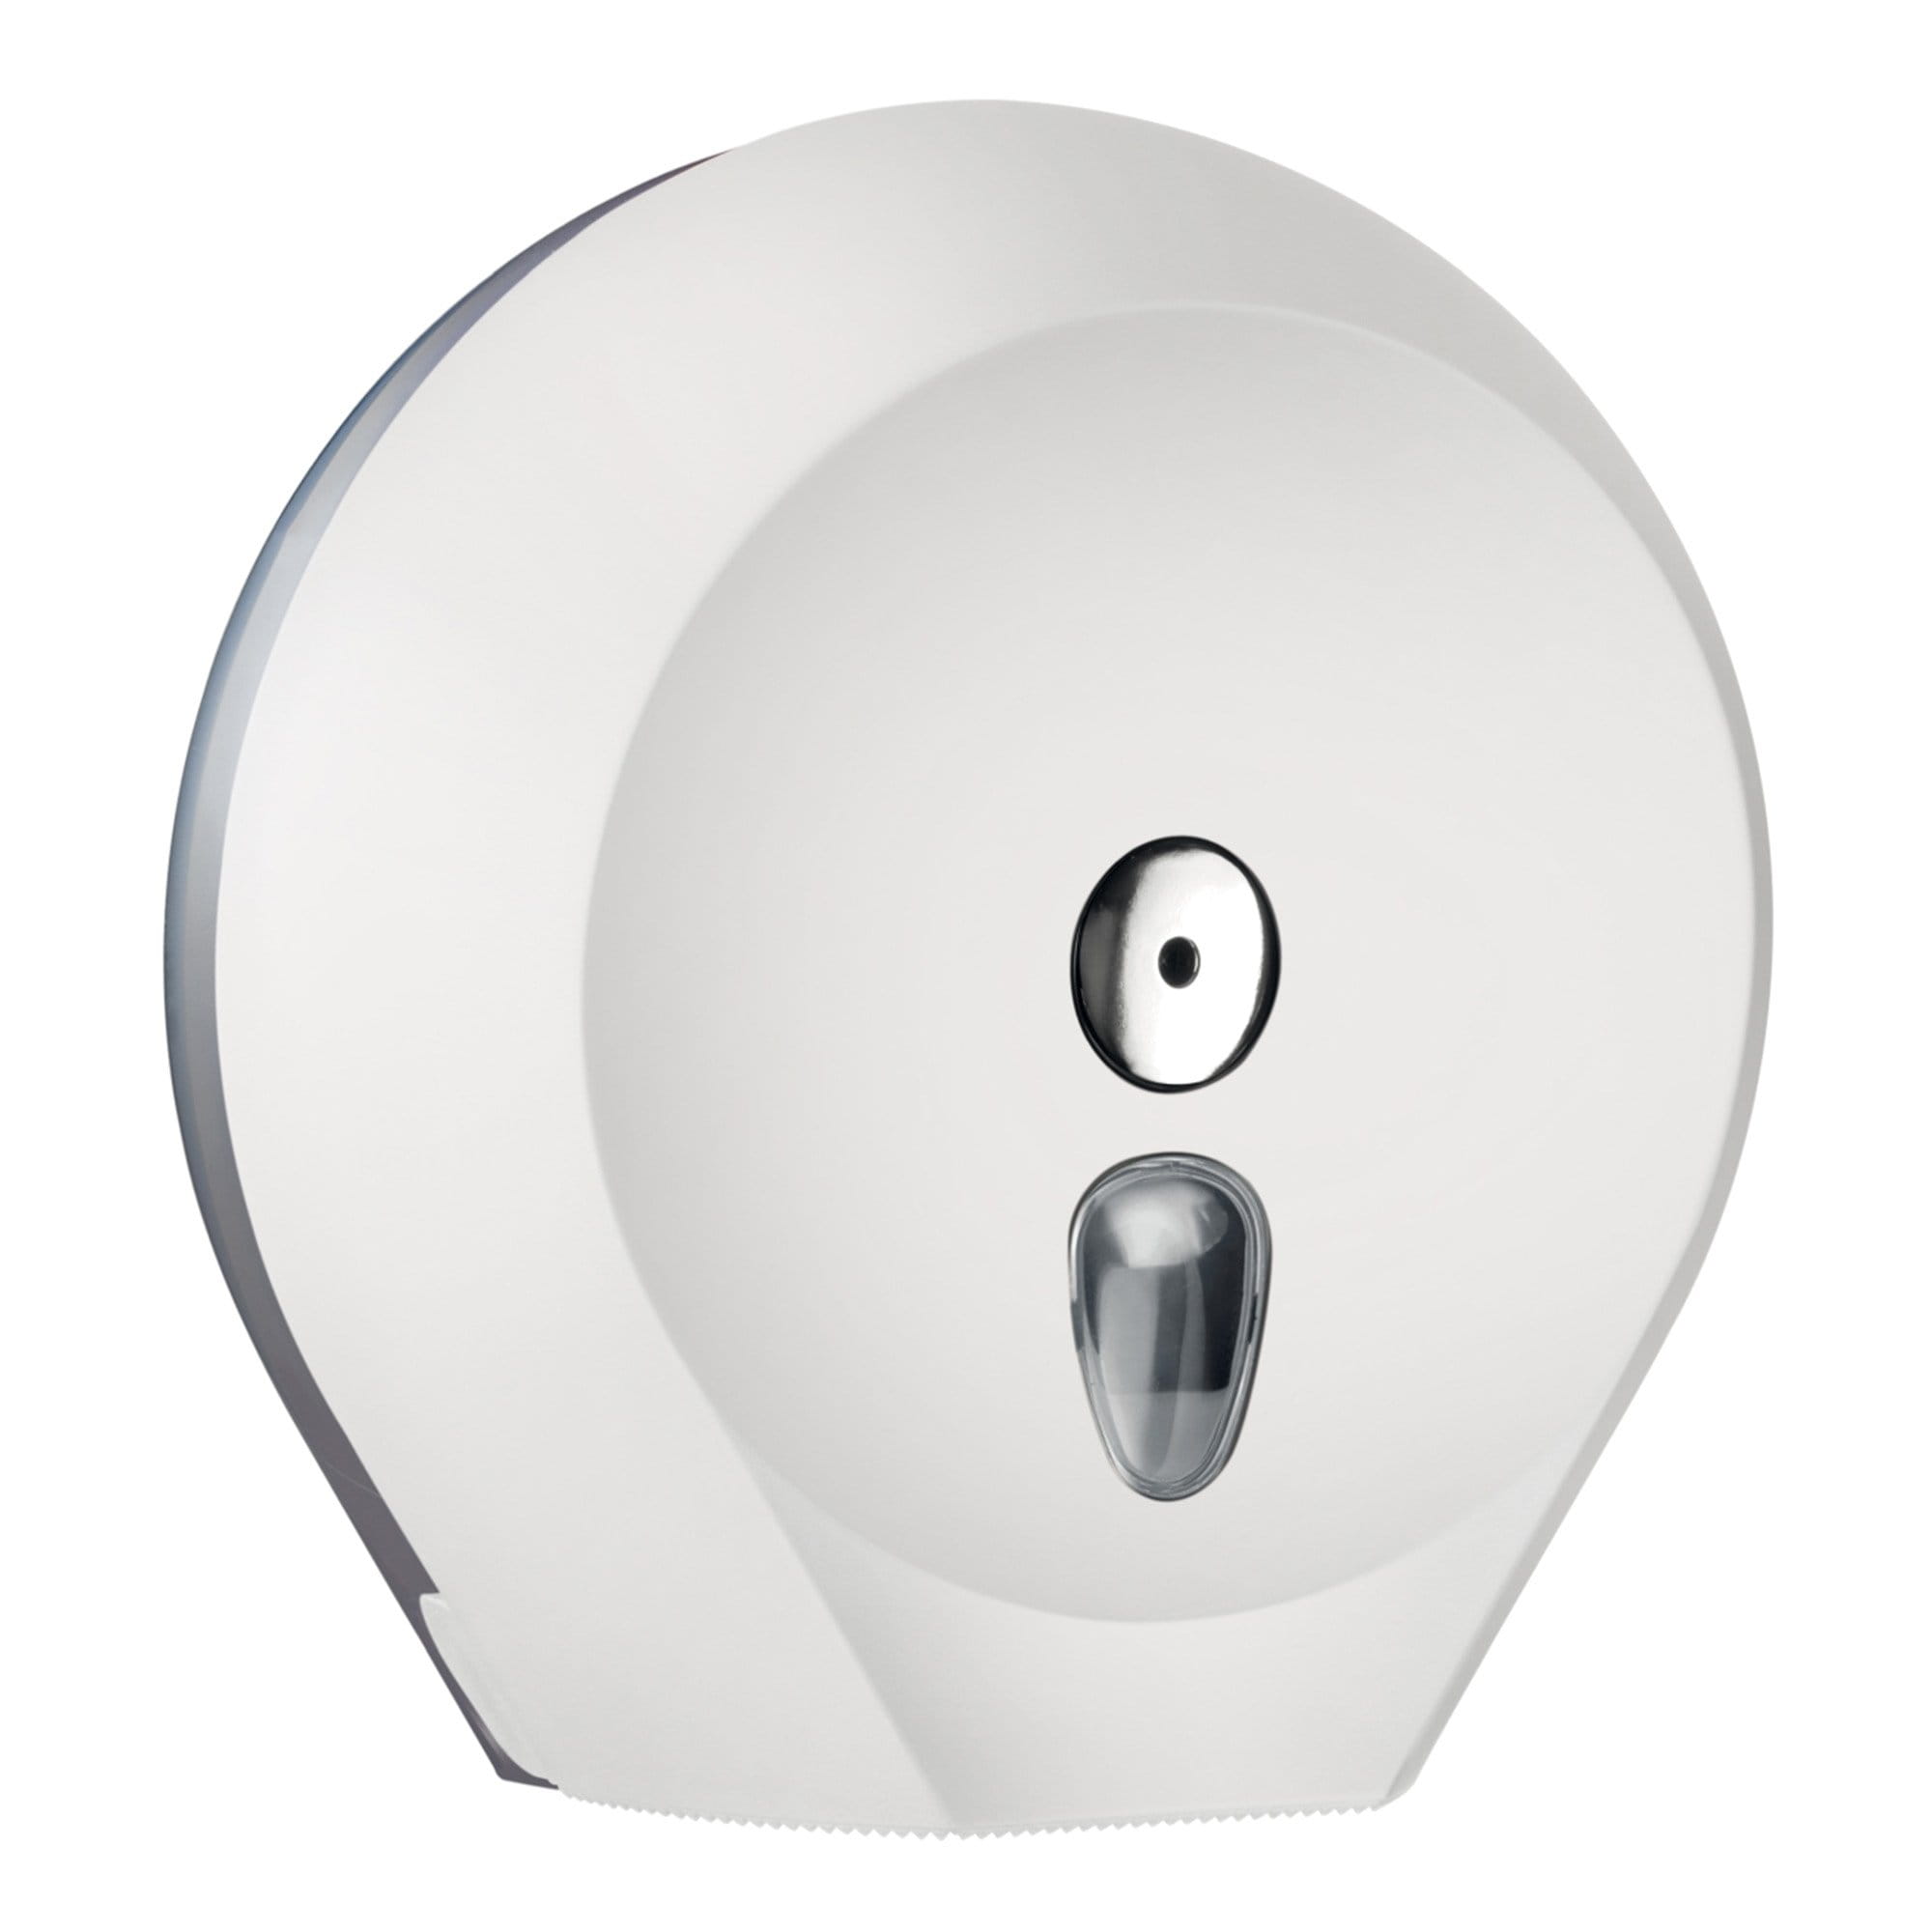 Racon CE designo L Toilettenpapierspender Jumbo Maxi weiß 118010_1